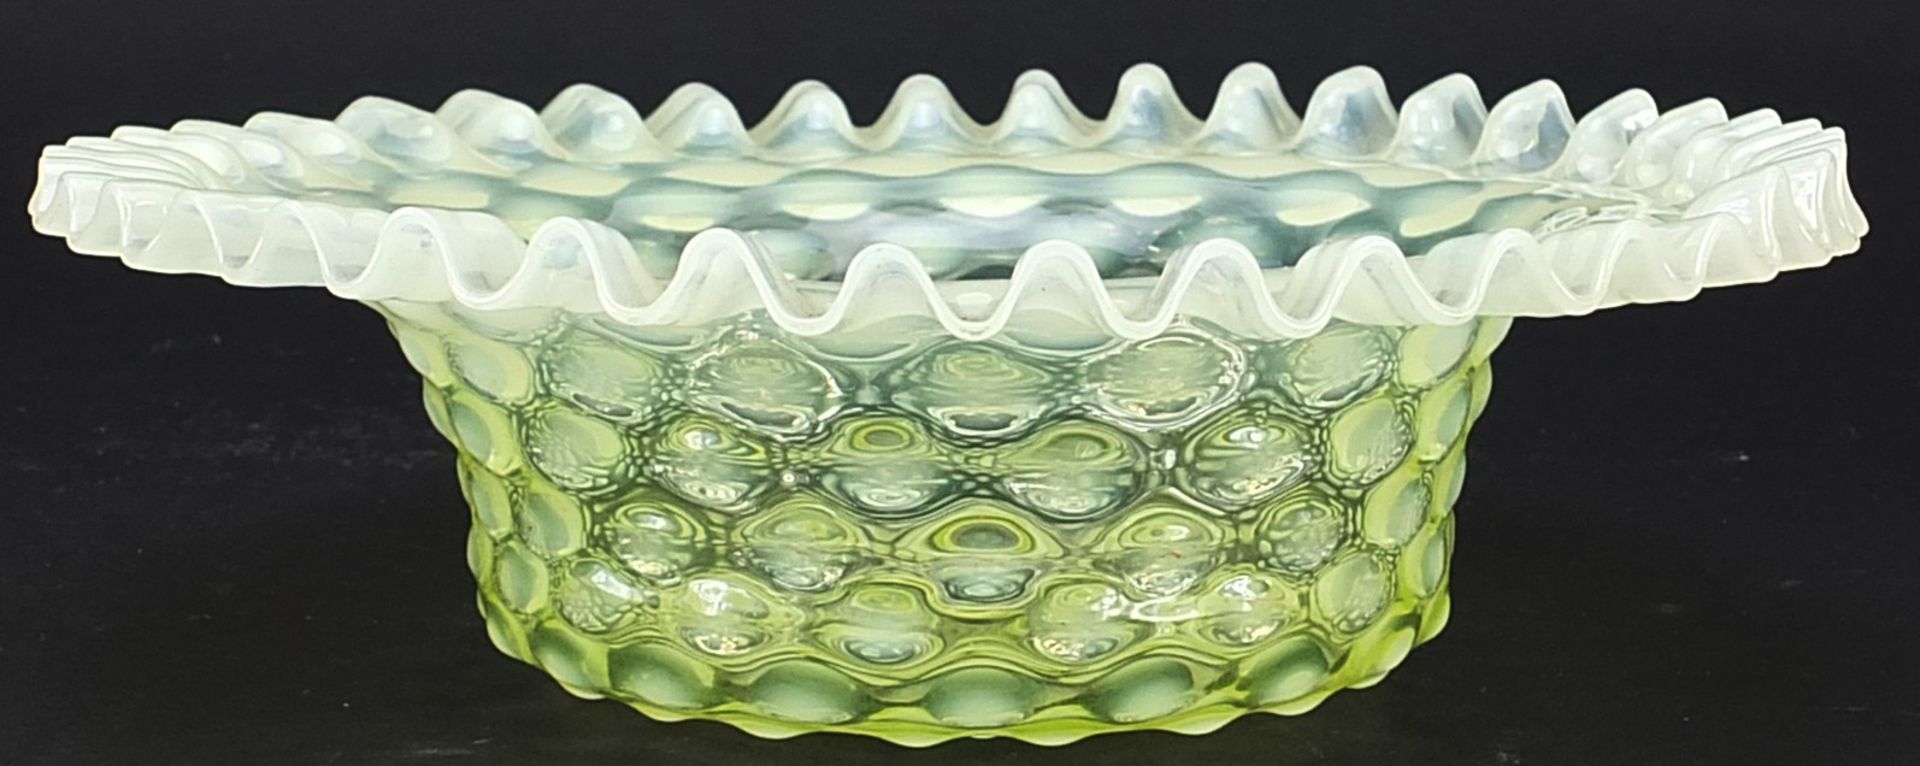 Art Nouveau Vaseline glass bowl with frilled rim, 22cm in diameter